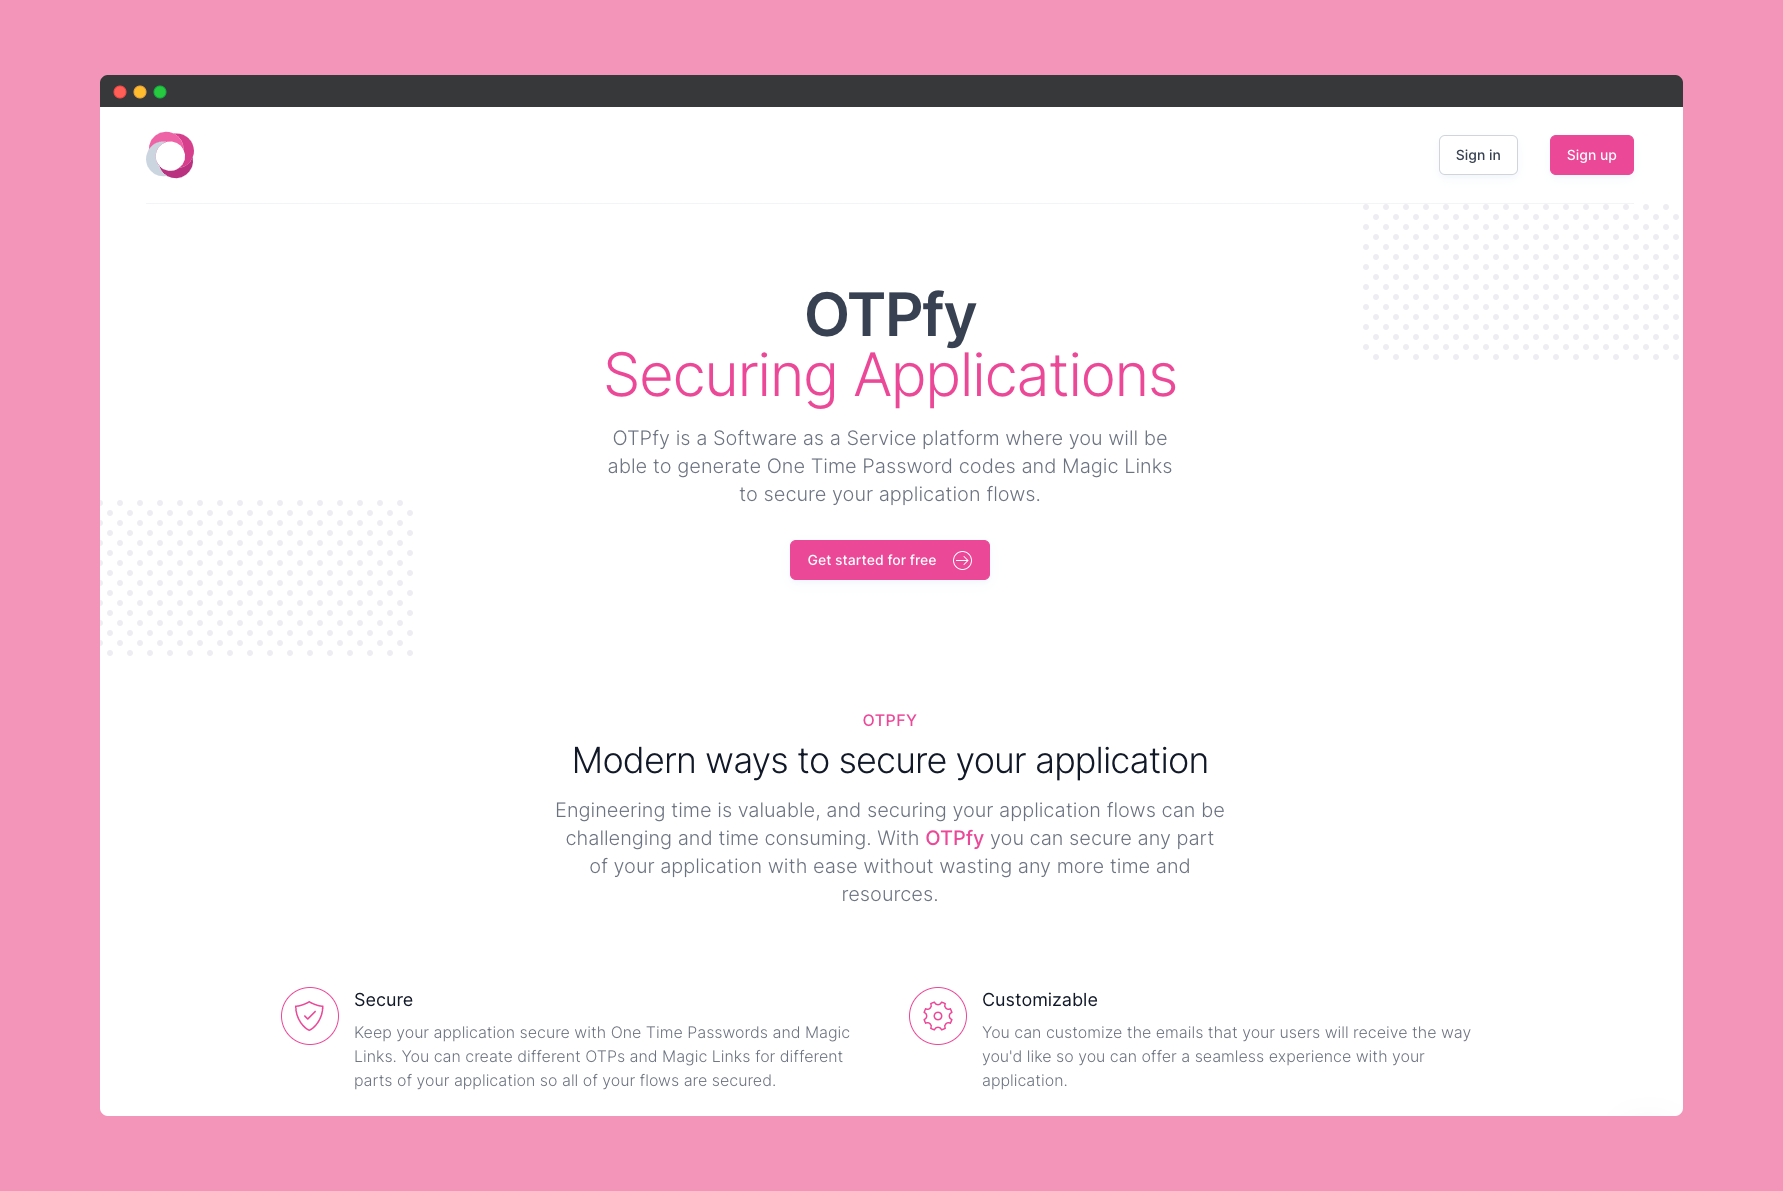 Find detailed information about OTPfy